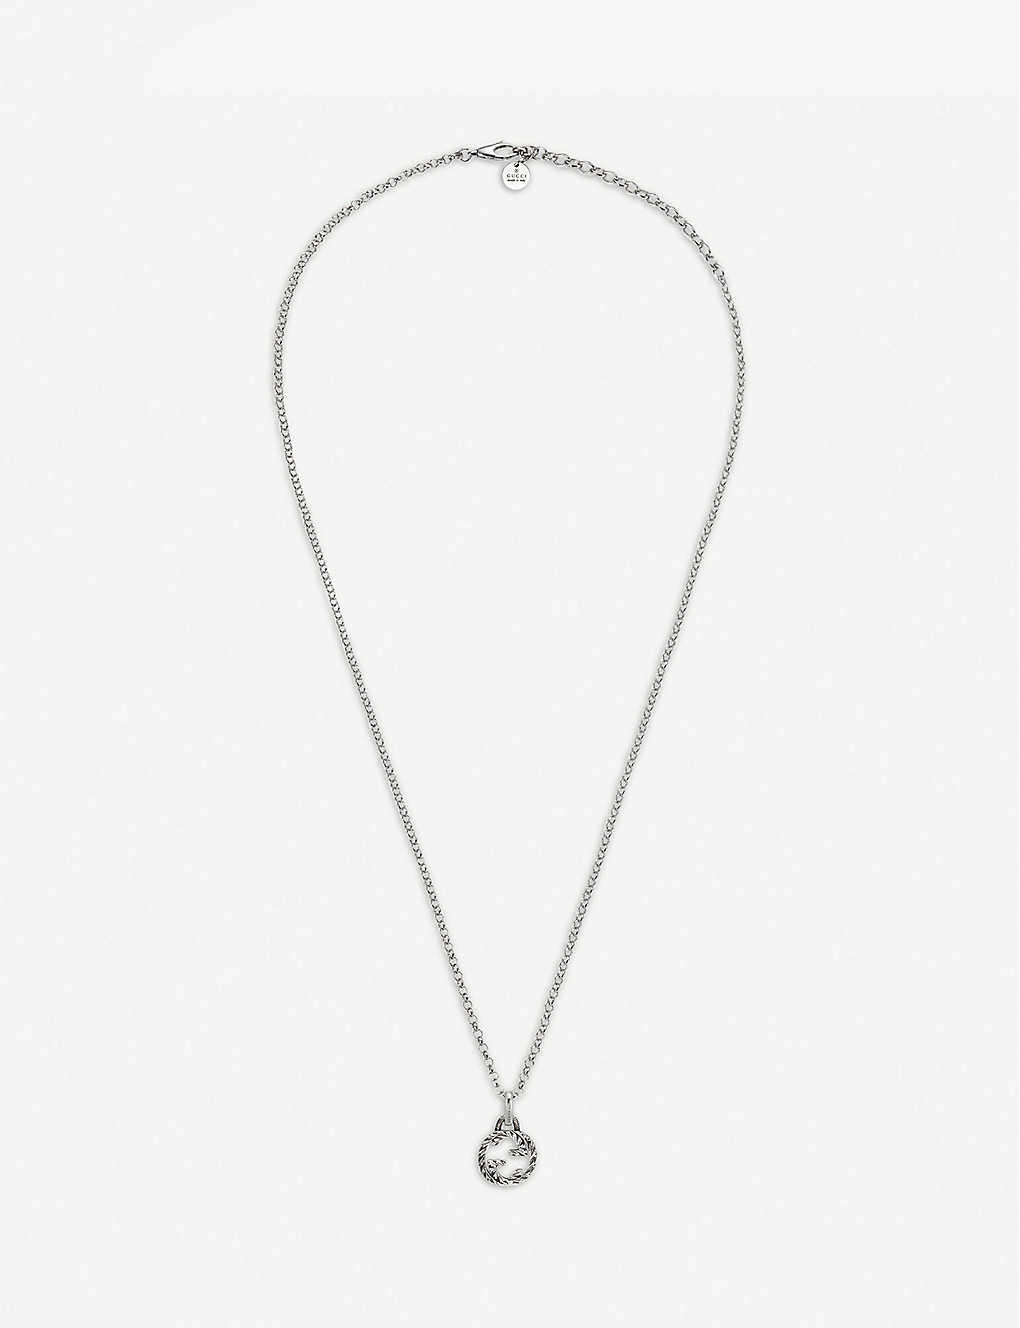 Interlocking G sterling silver necklace(8007230)